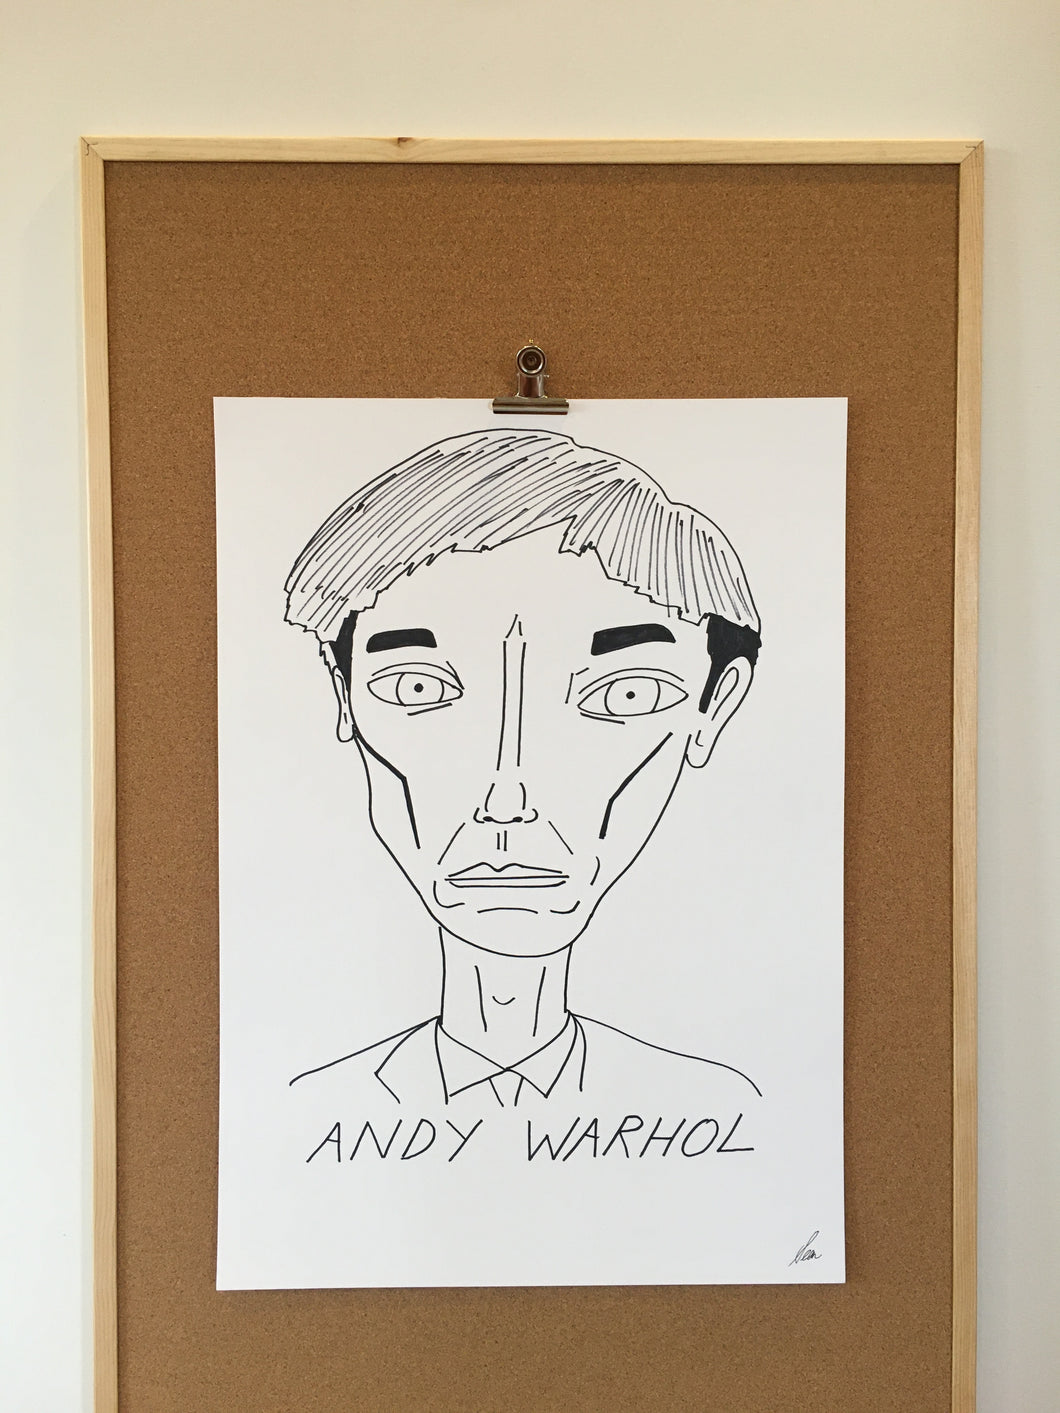 Badly Drawn Andy Warhol - Original Drawing - A2.